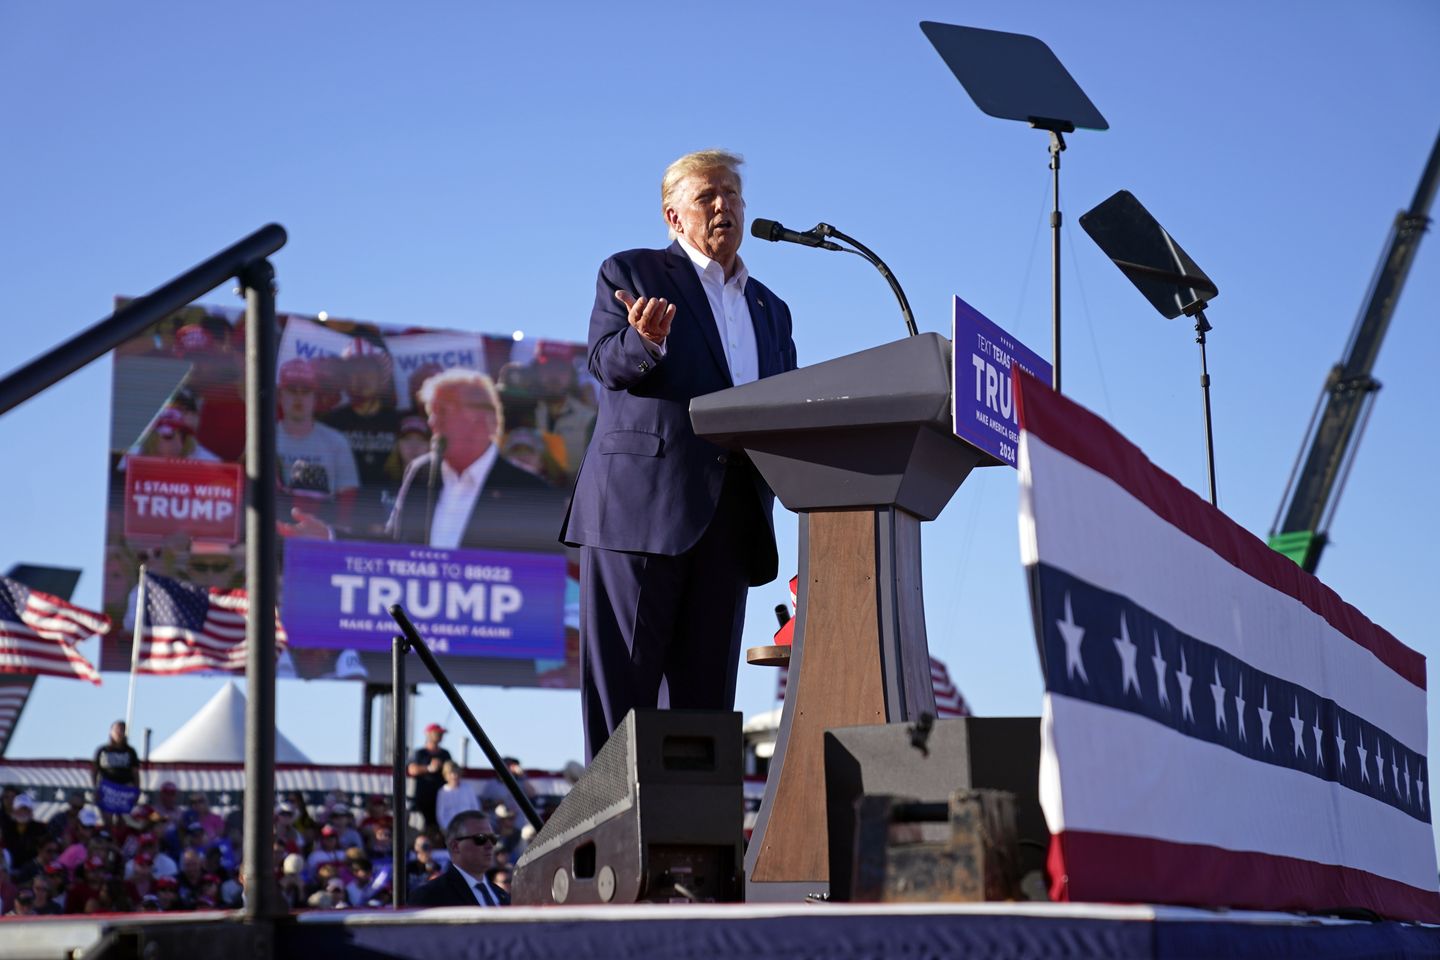 Trump rally falls during anniversary of Waco’s dark past

End-shutdown